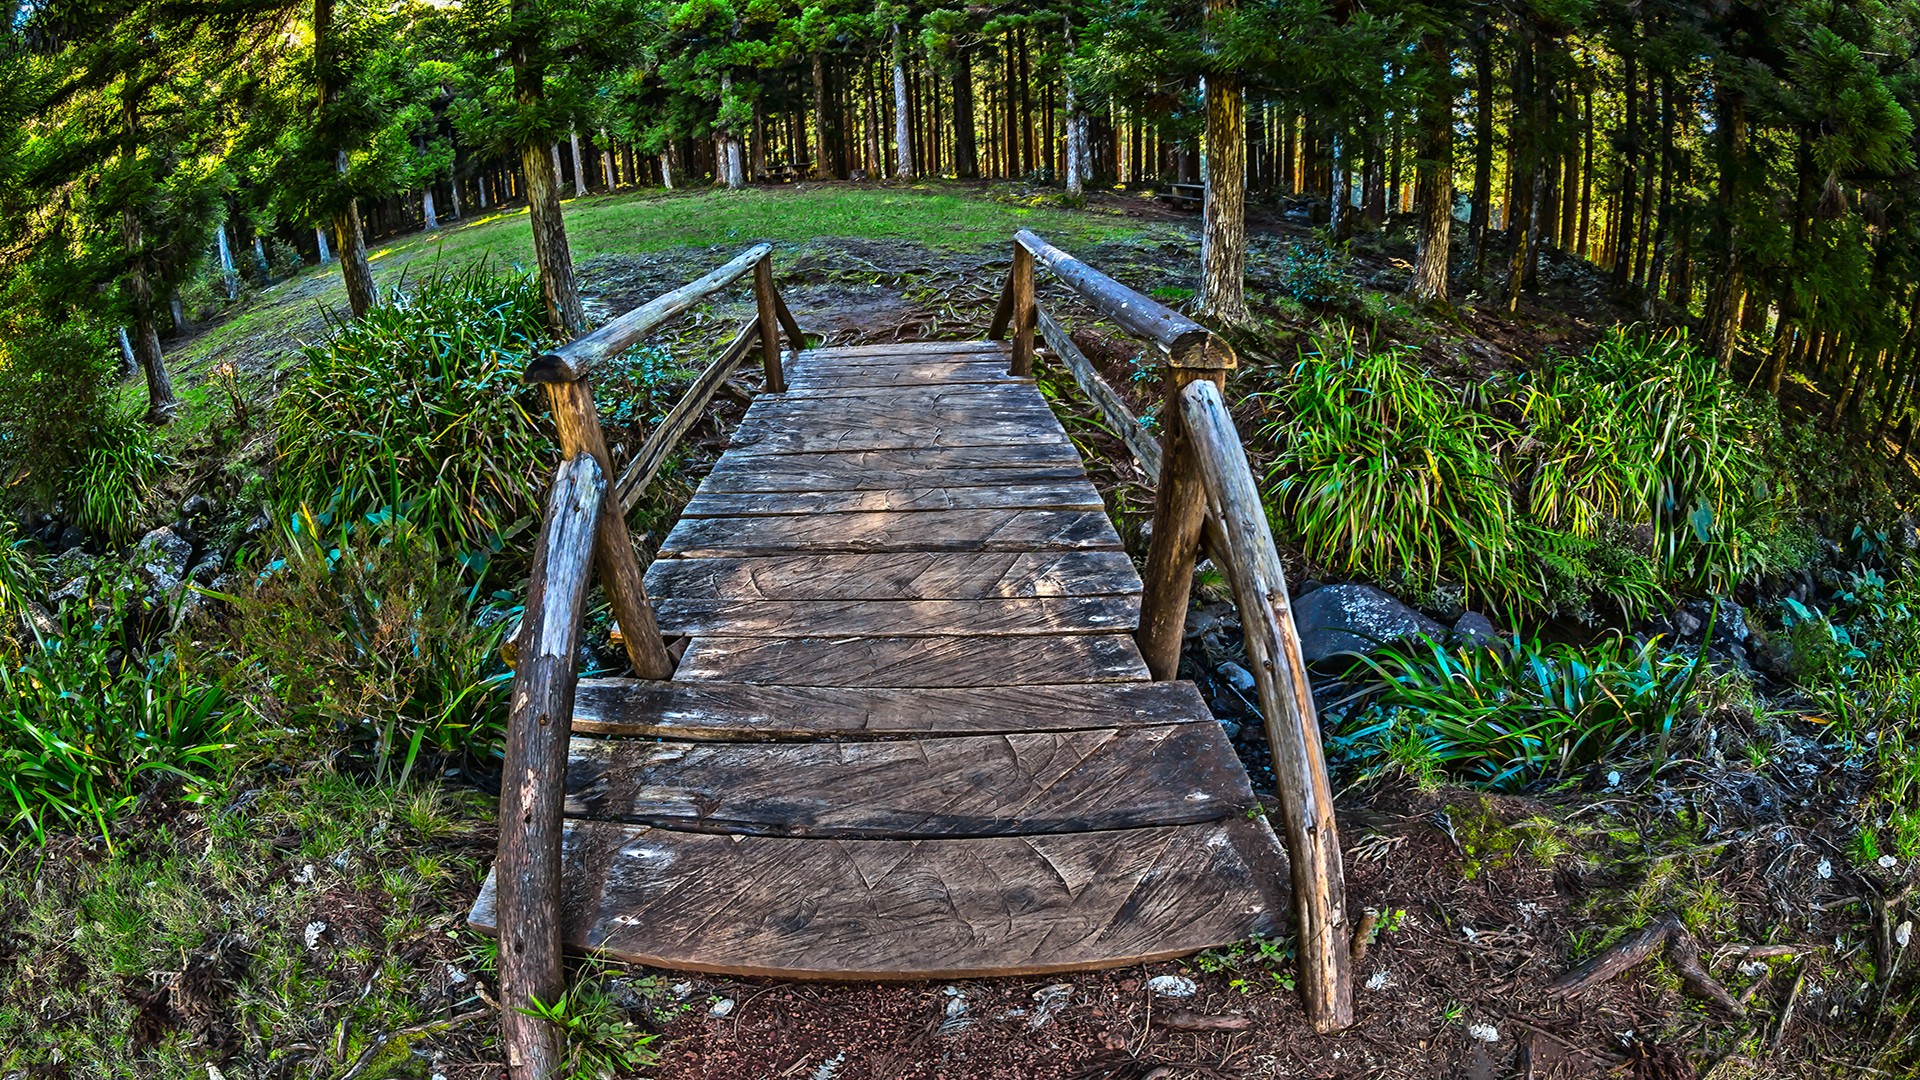 General 1920x1080 fisheye lens HDR bridge wood forest nature landscape grass planks dirt wooden bridge